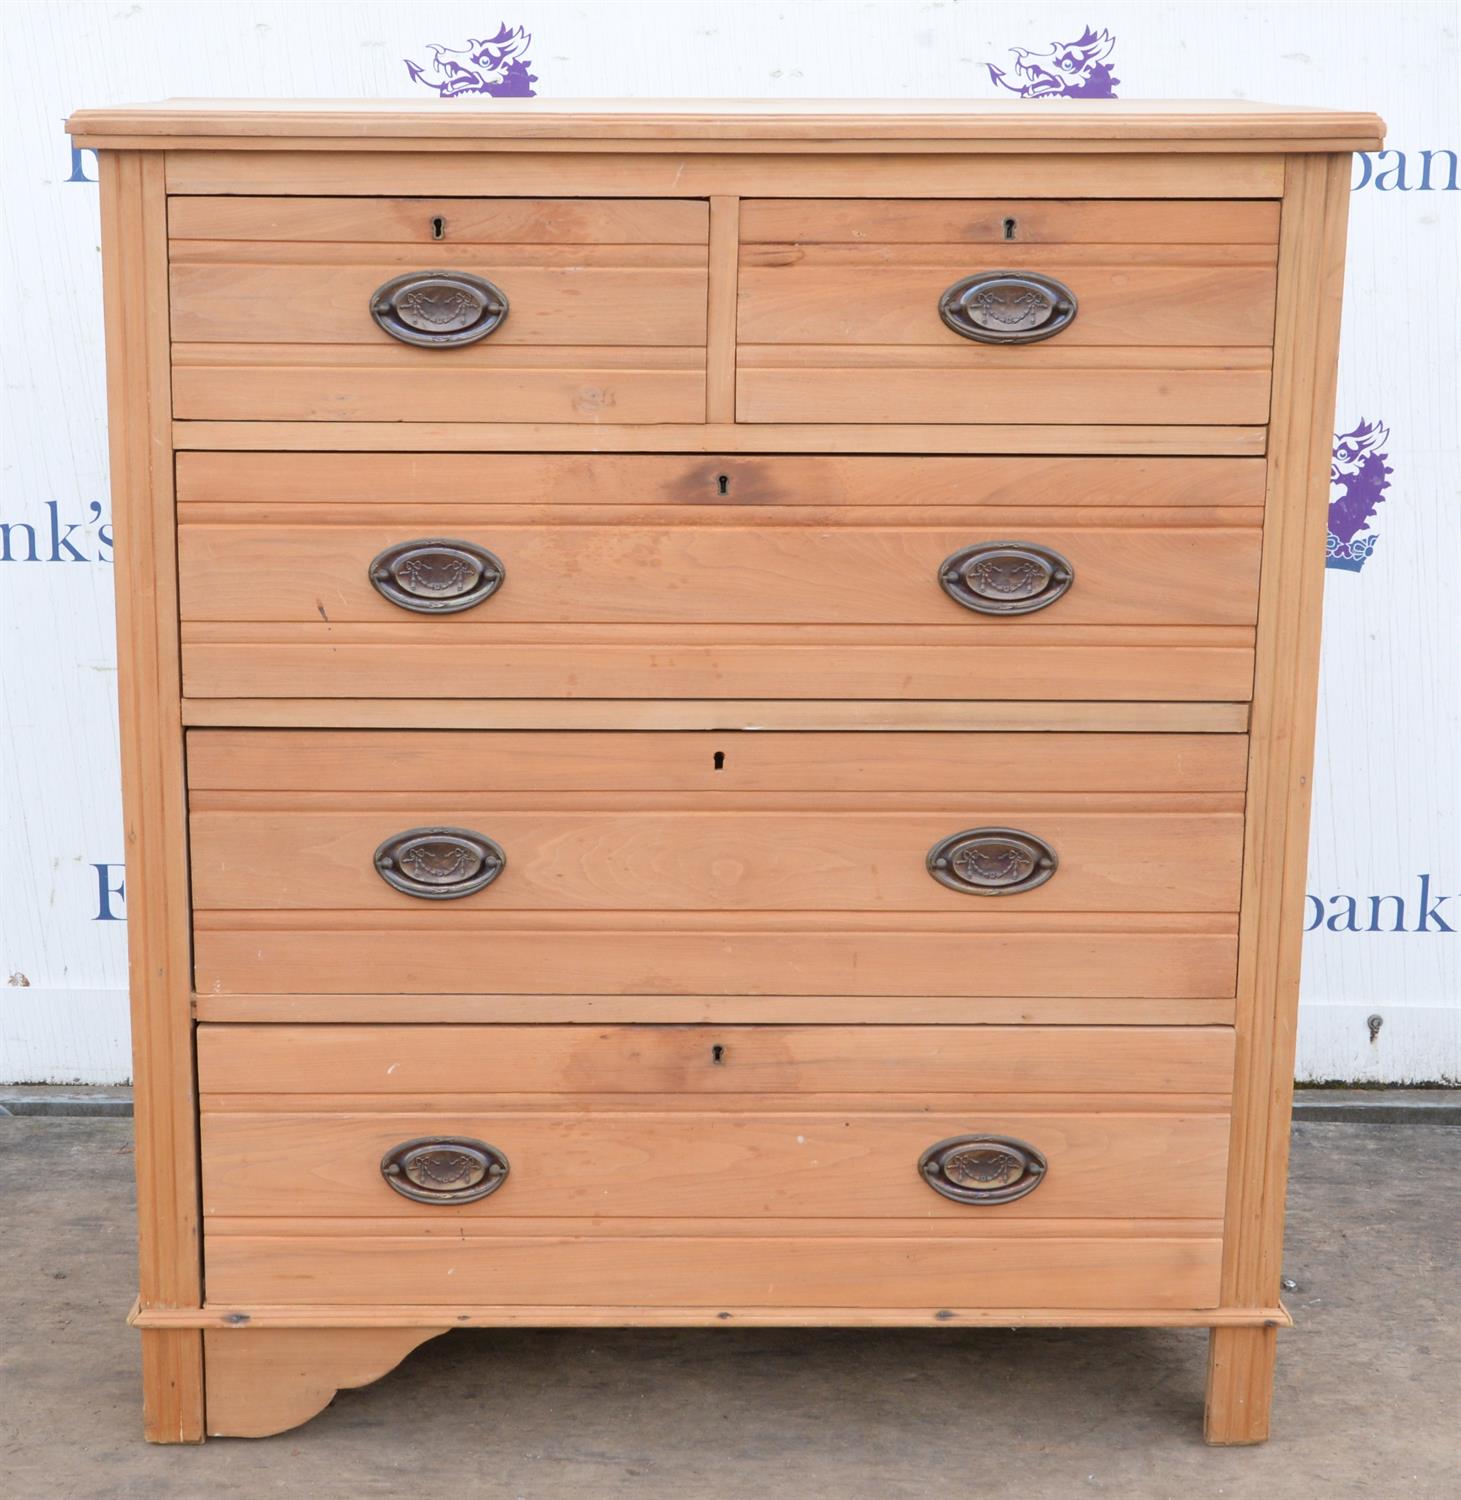 An Edwardian walnut chest of drawers, stripped down, H 110 cm, W 99cm, D 47cm